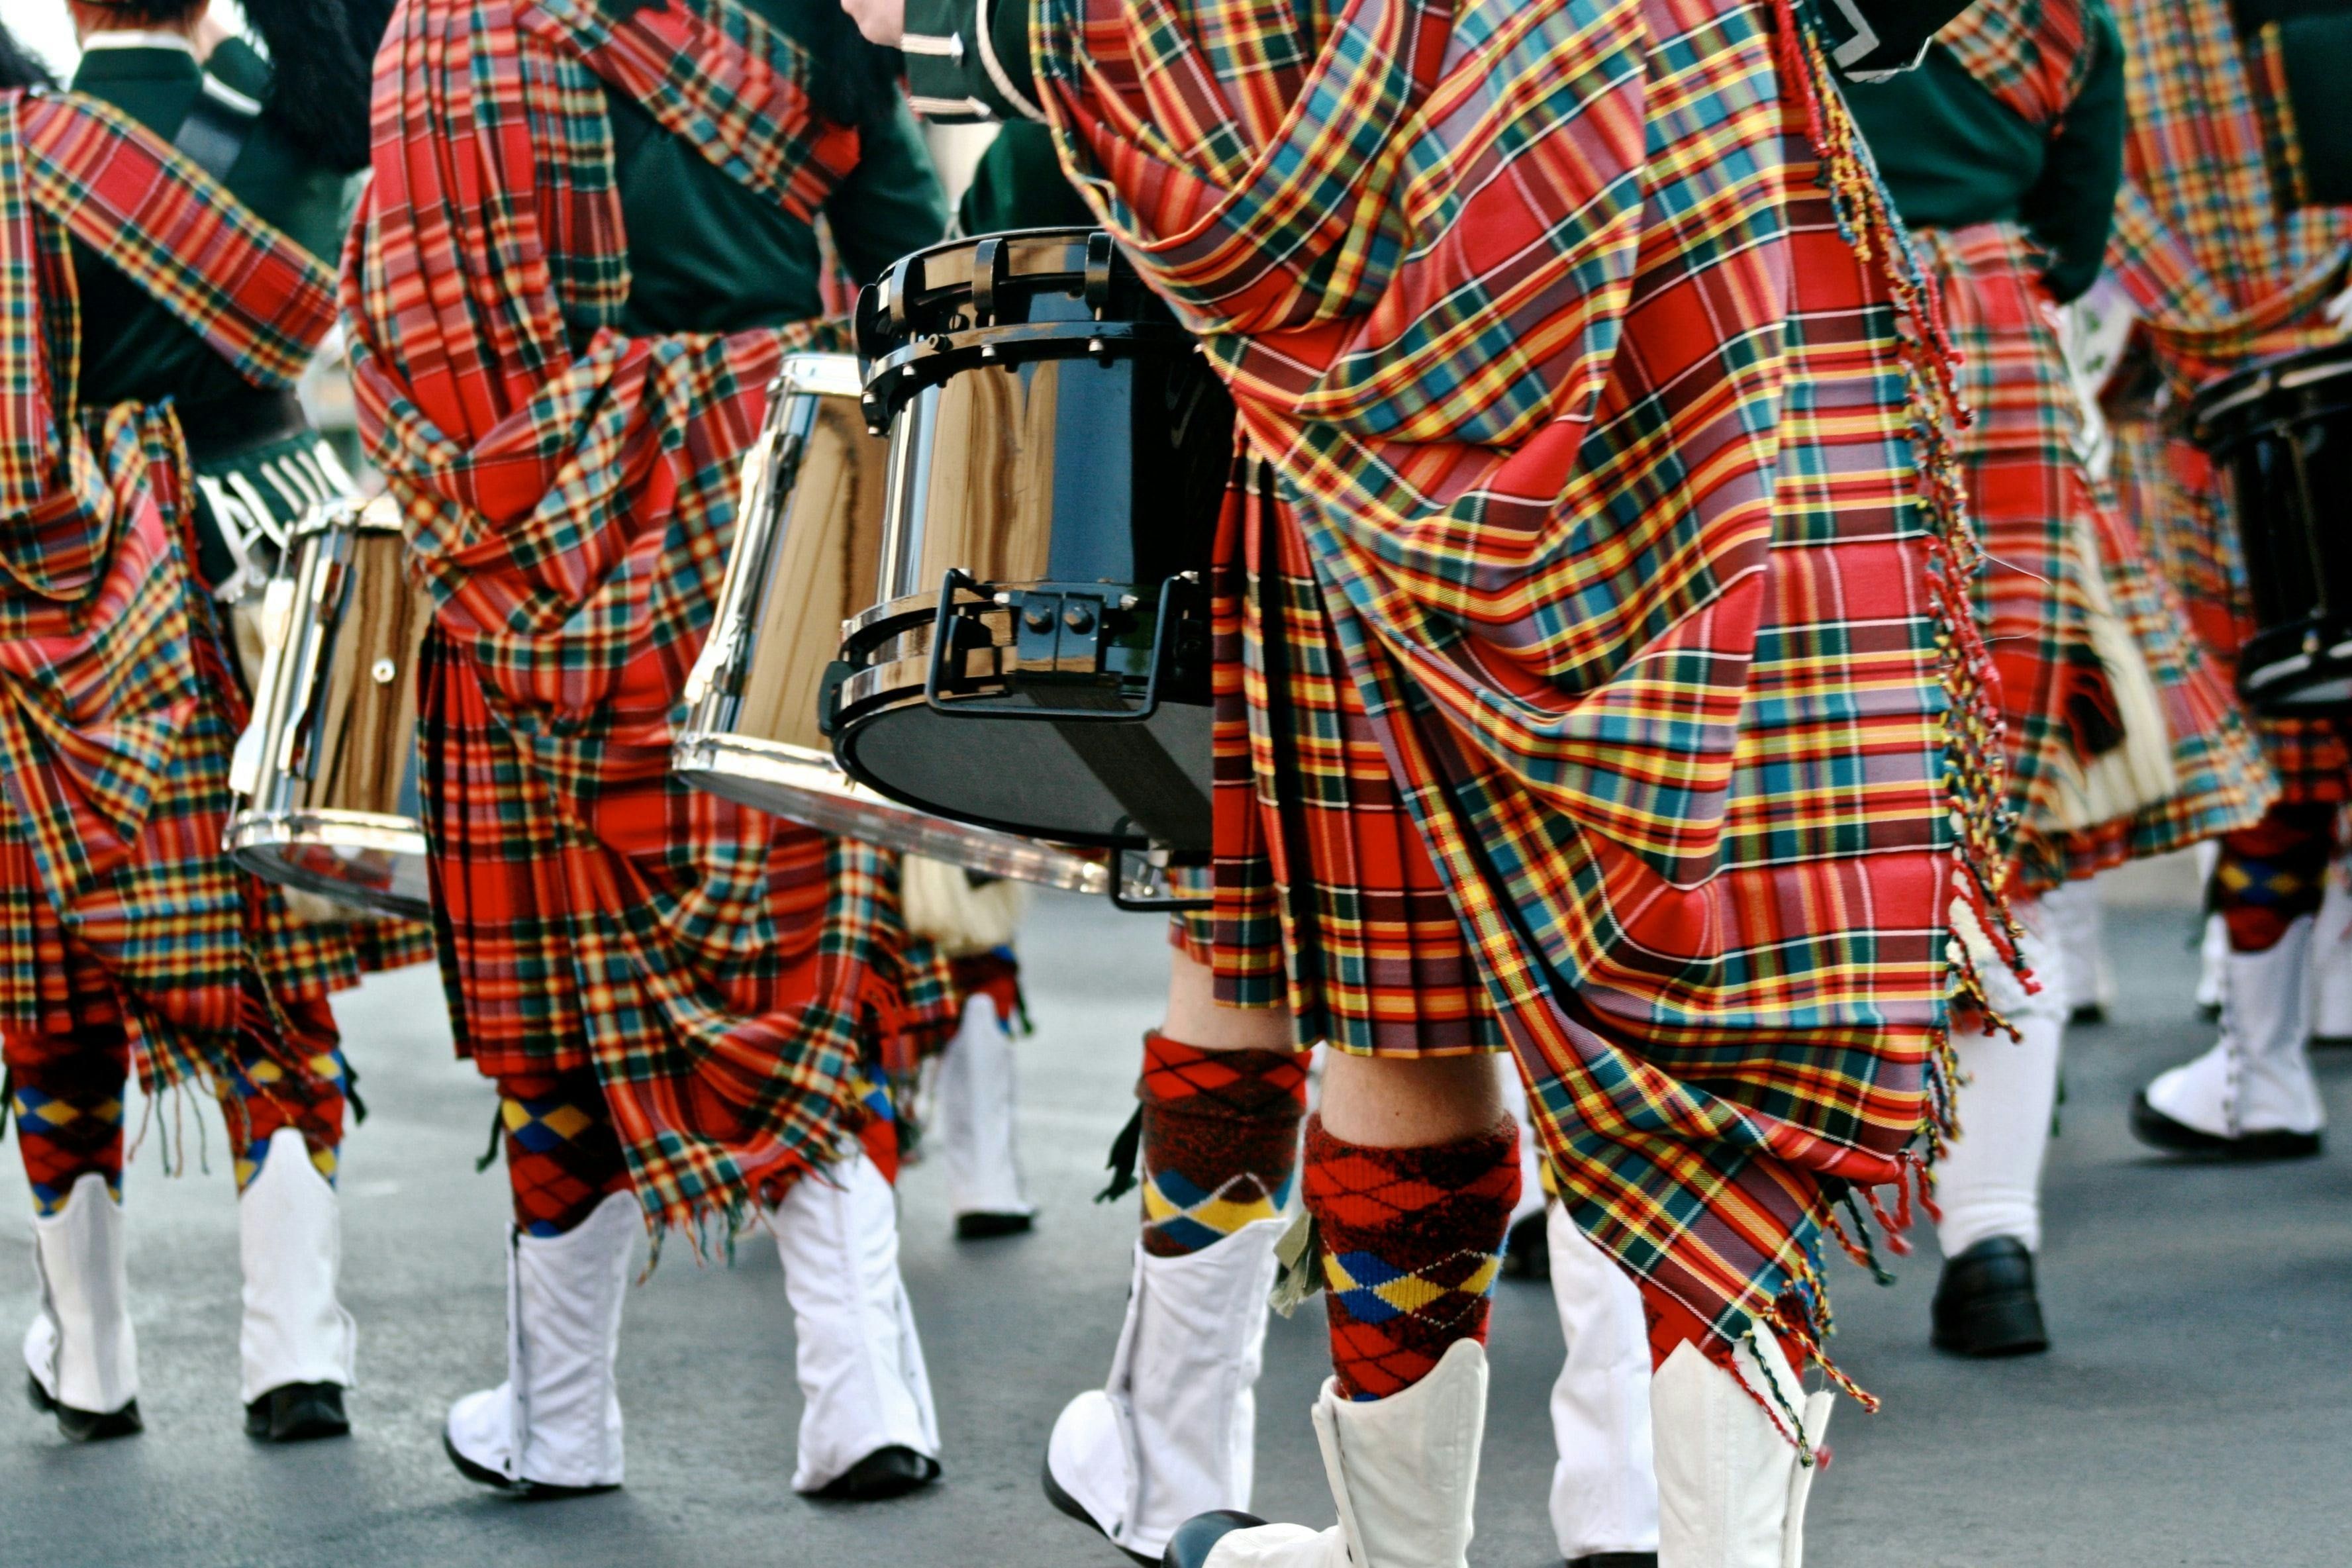 People wearing Scottish kilts and playing music.